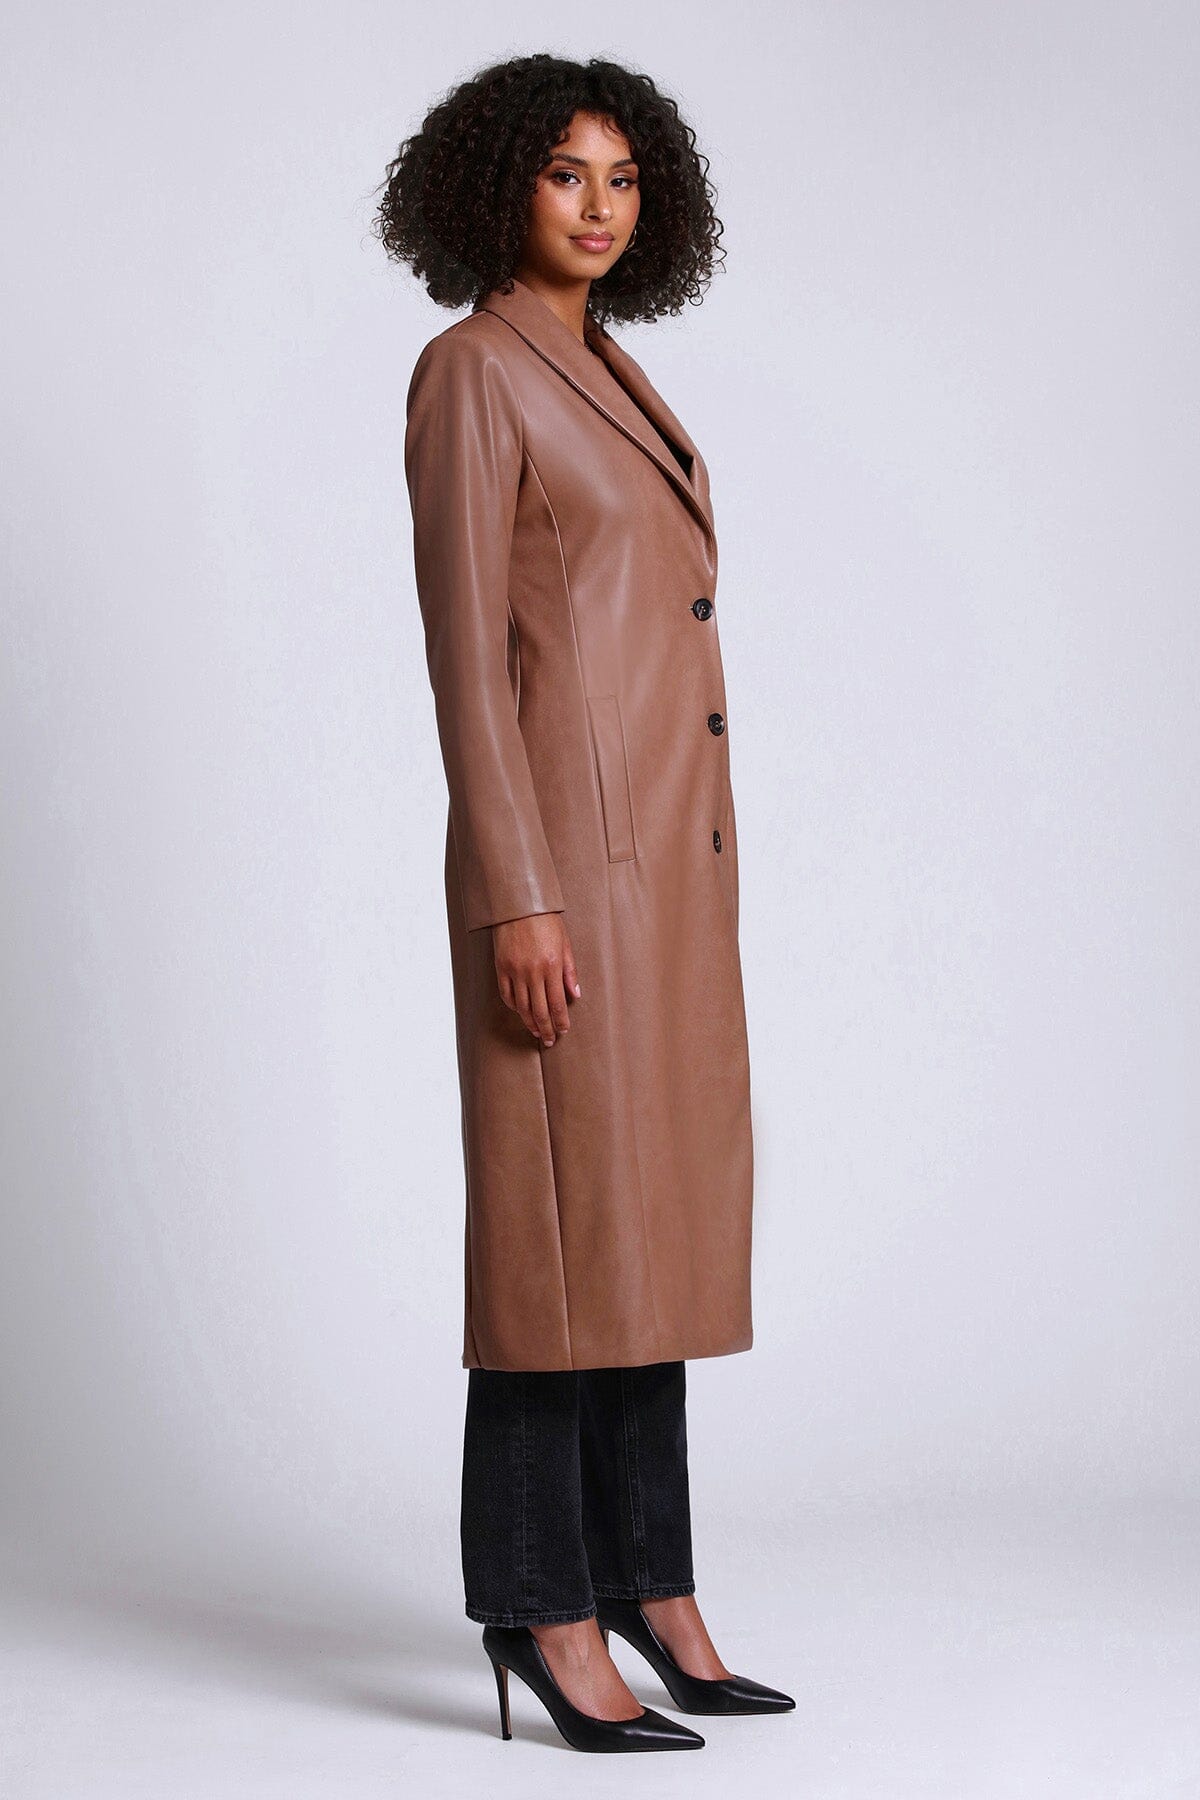 faux ever leather single breasted coat jacket mink brown - women's figure flattering designer fashion cute date night outerwear long coats jackets